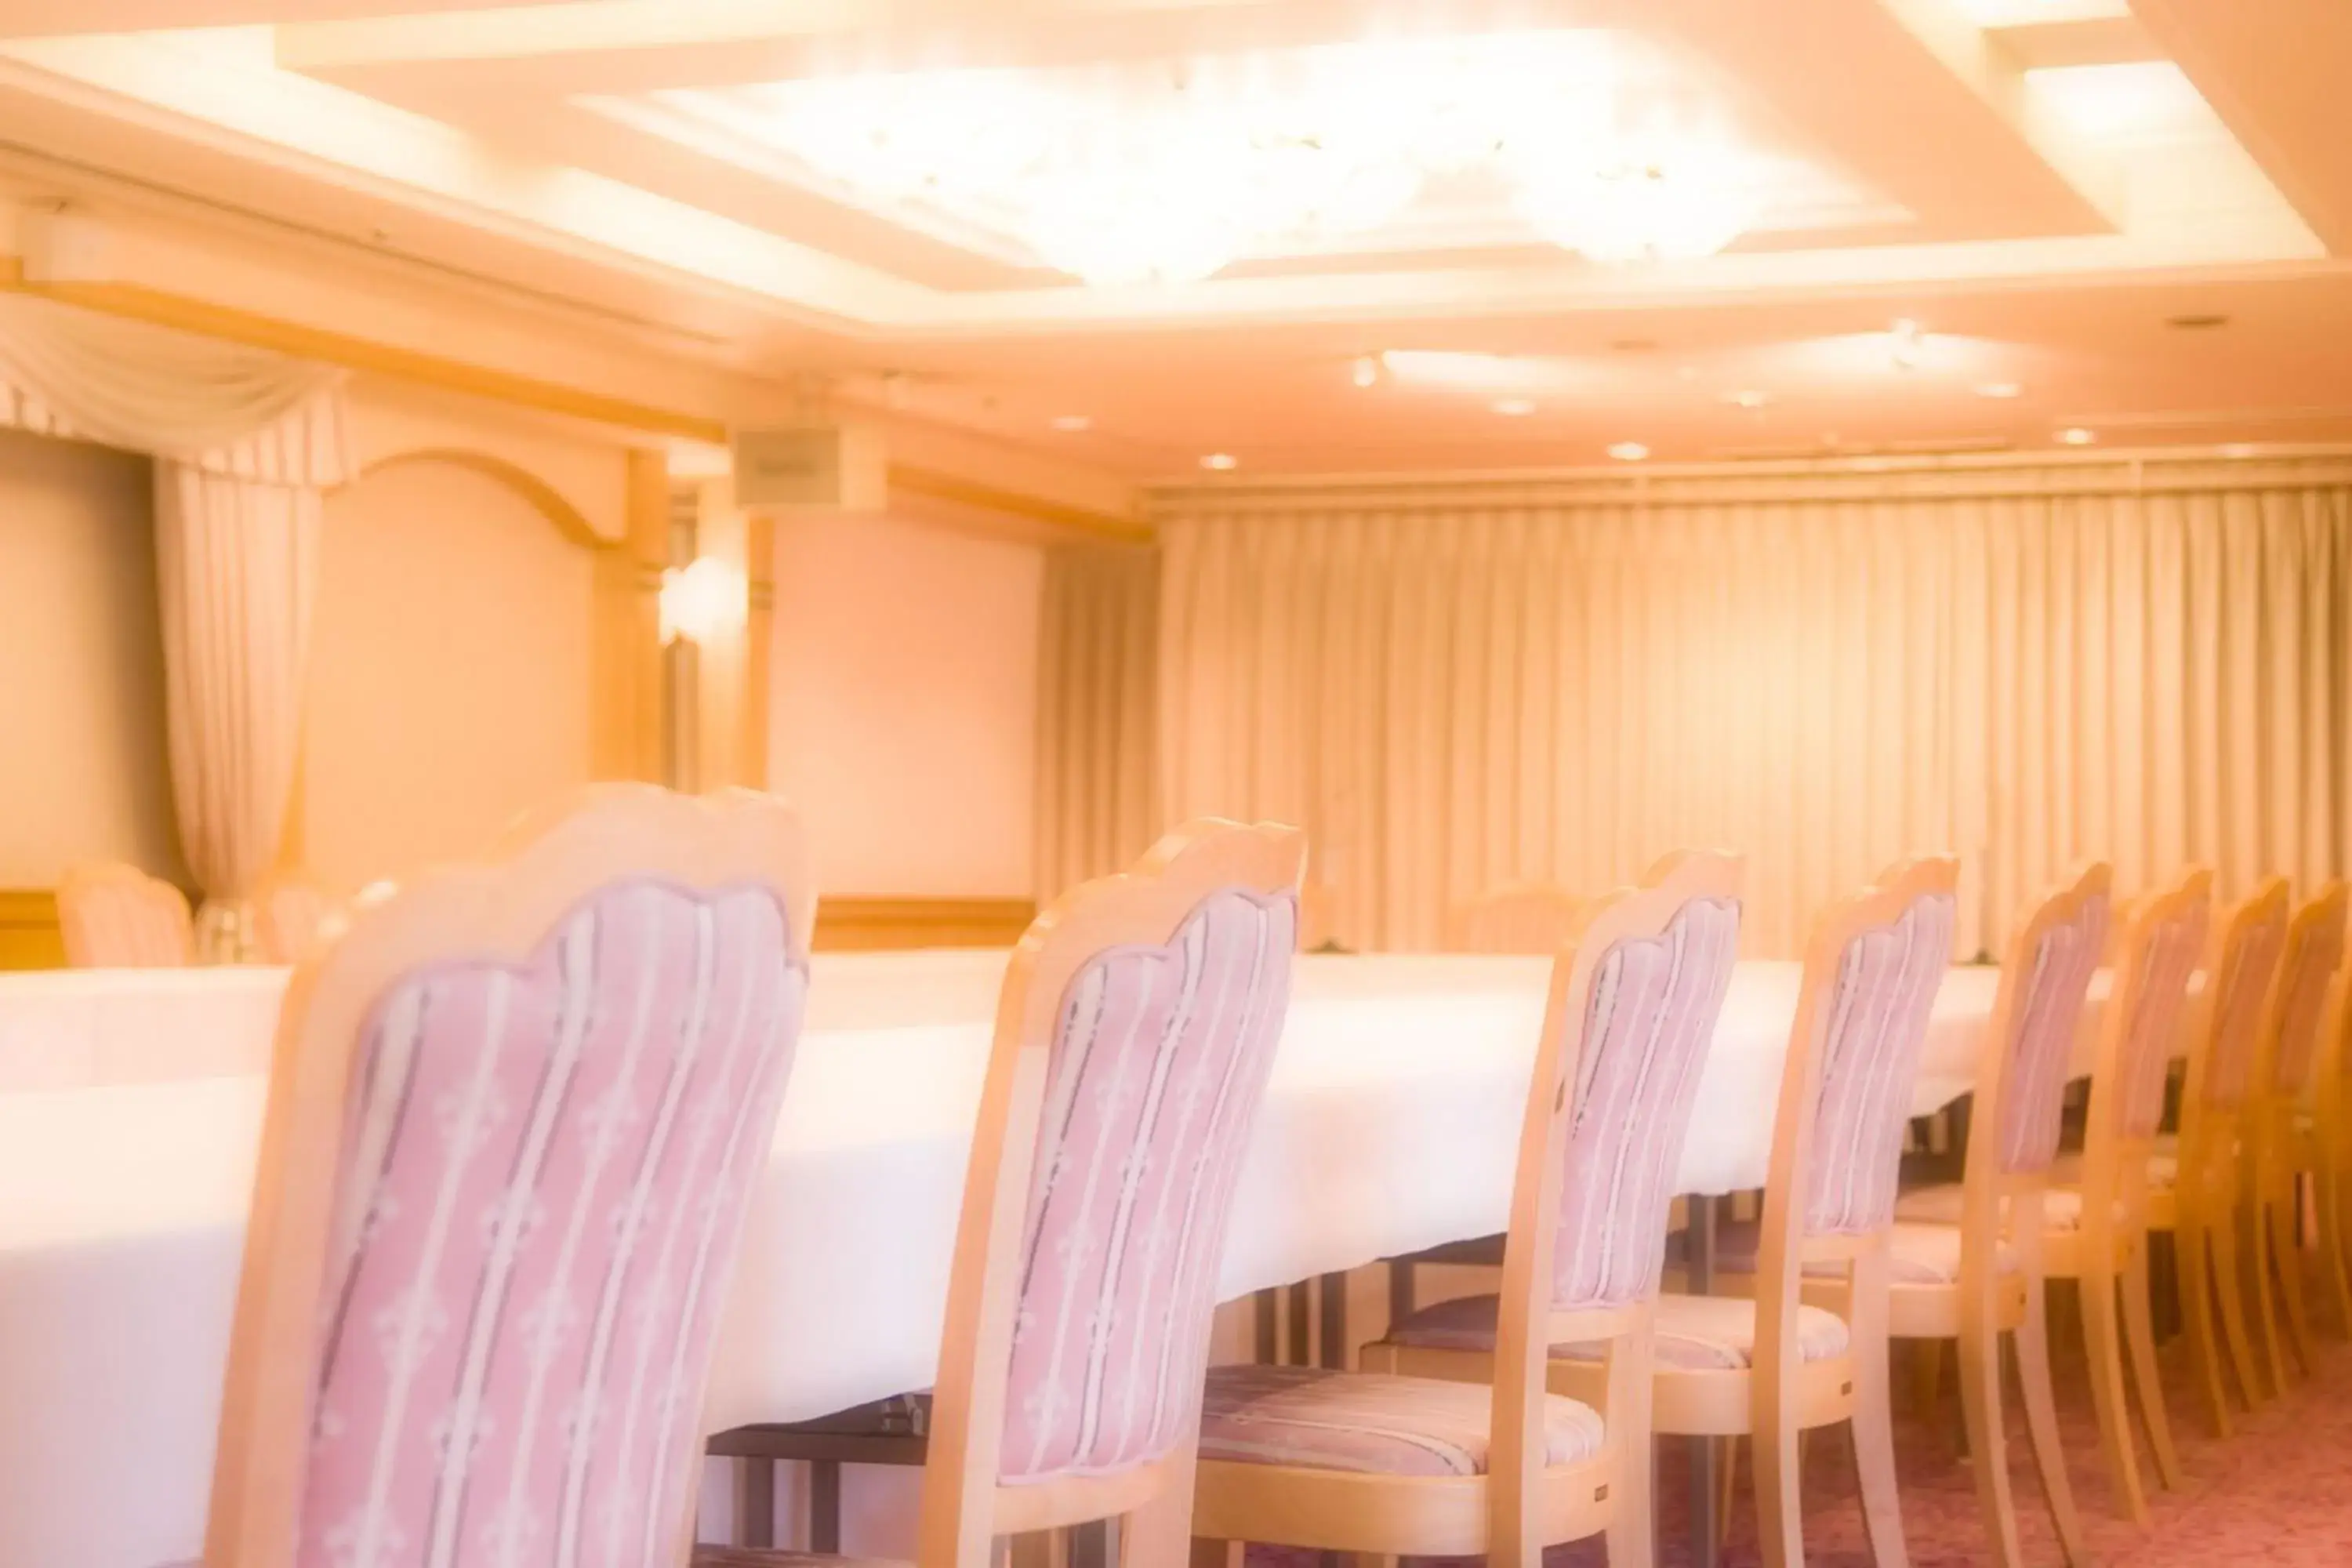 Banquet/Function facilities, Banquet Facilities in Tokyo Grand Hotel